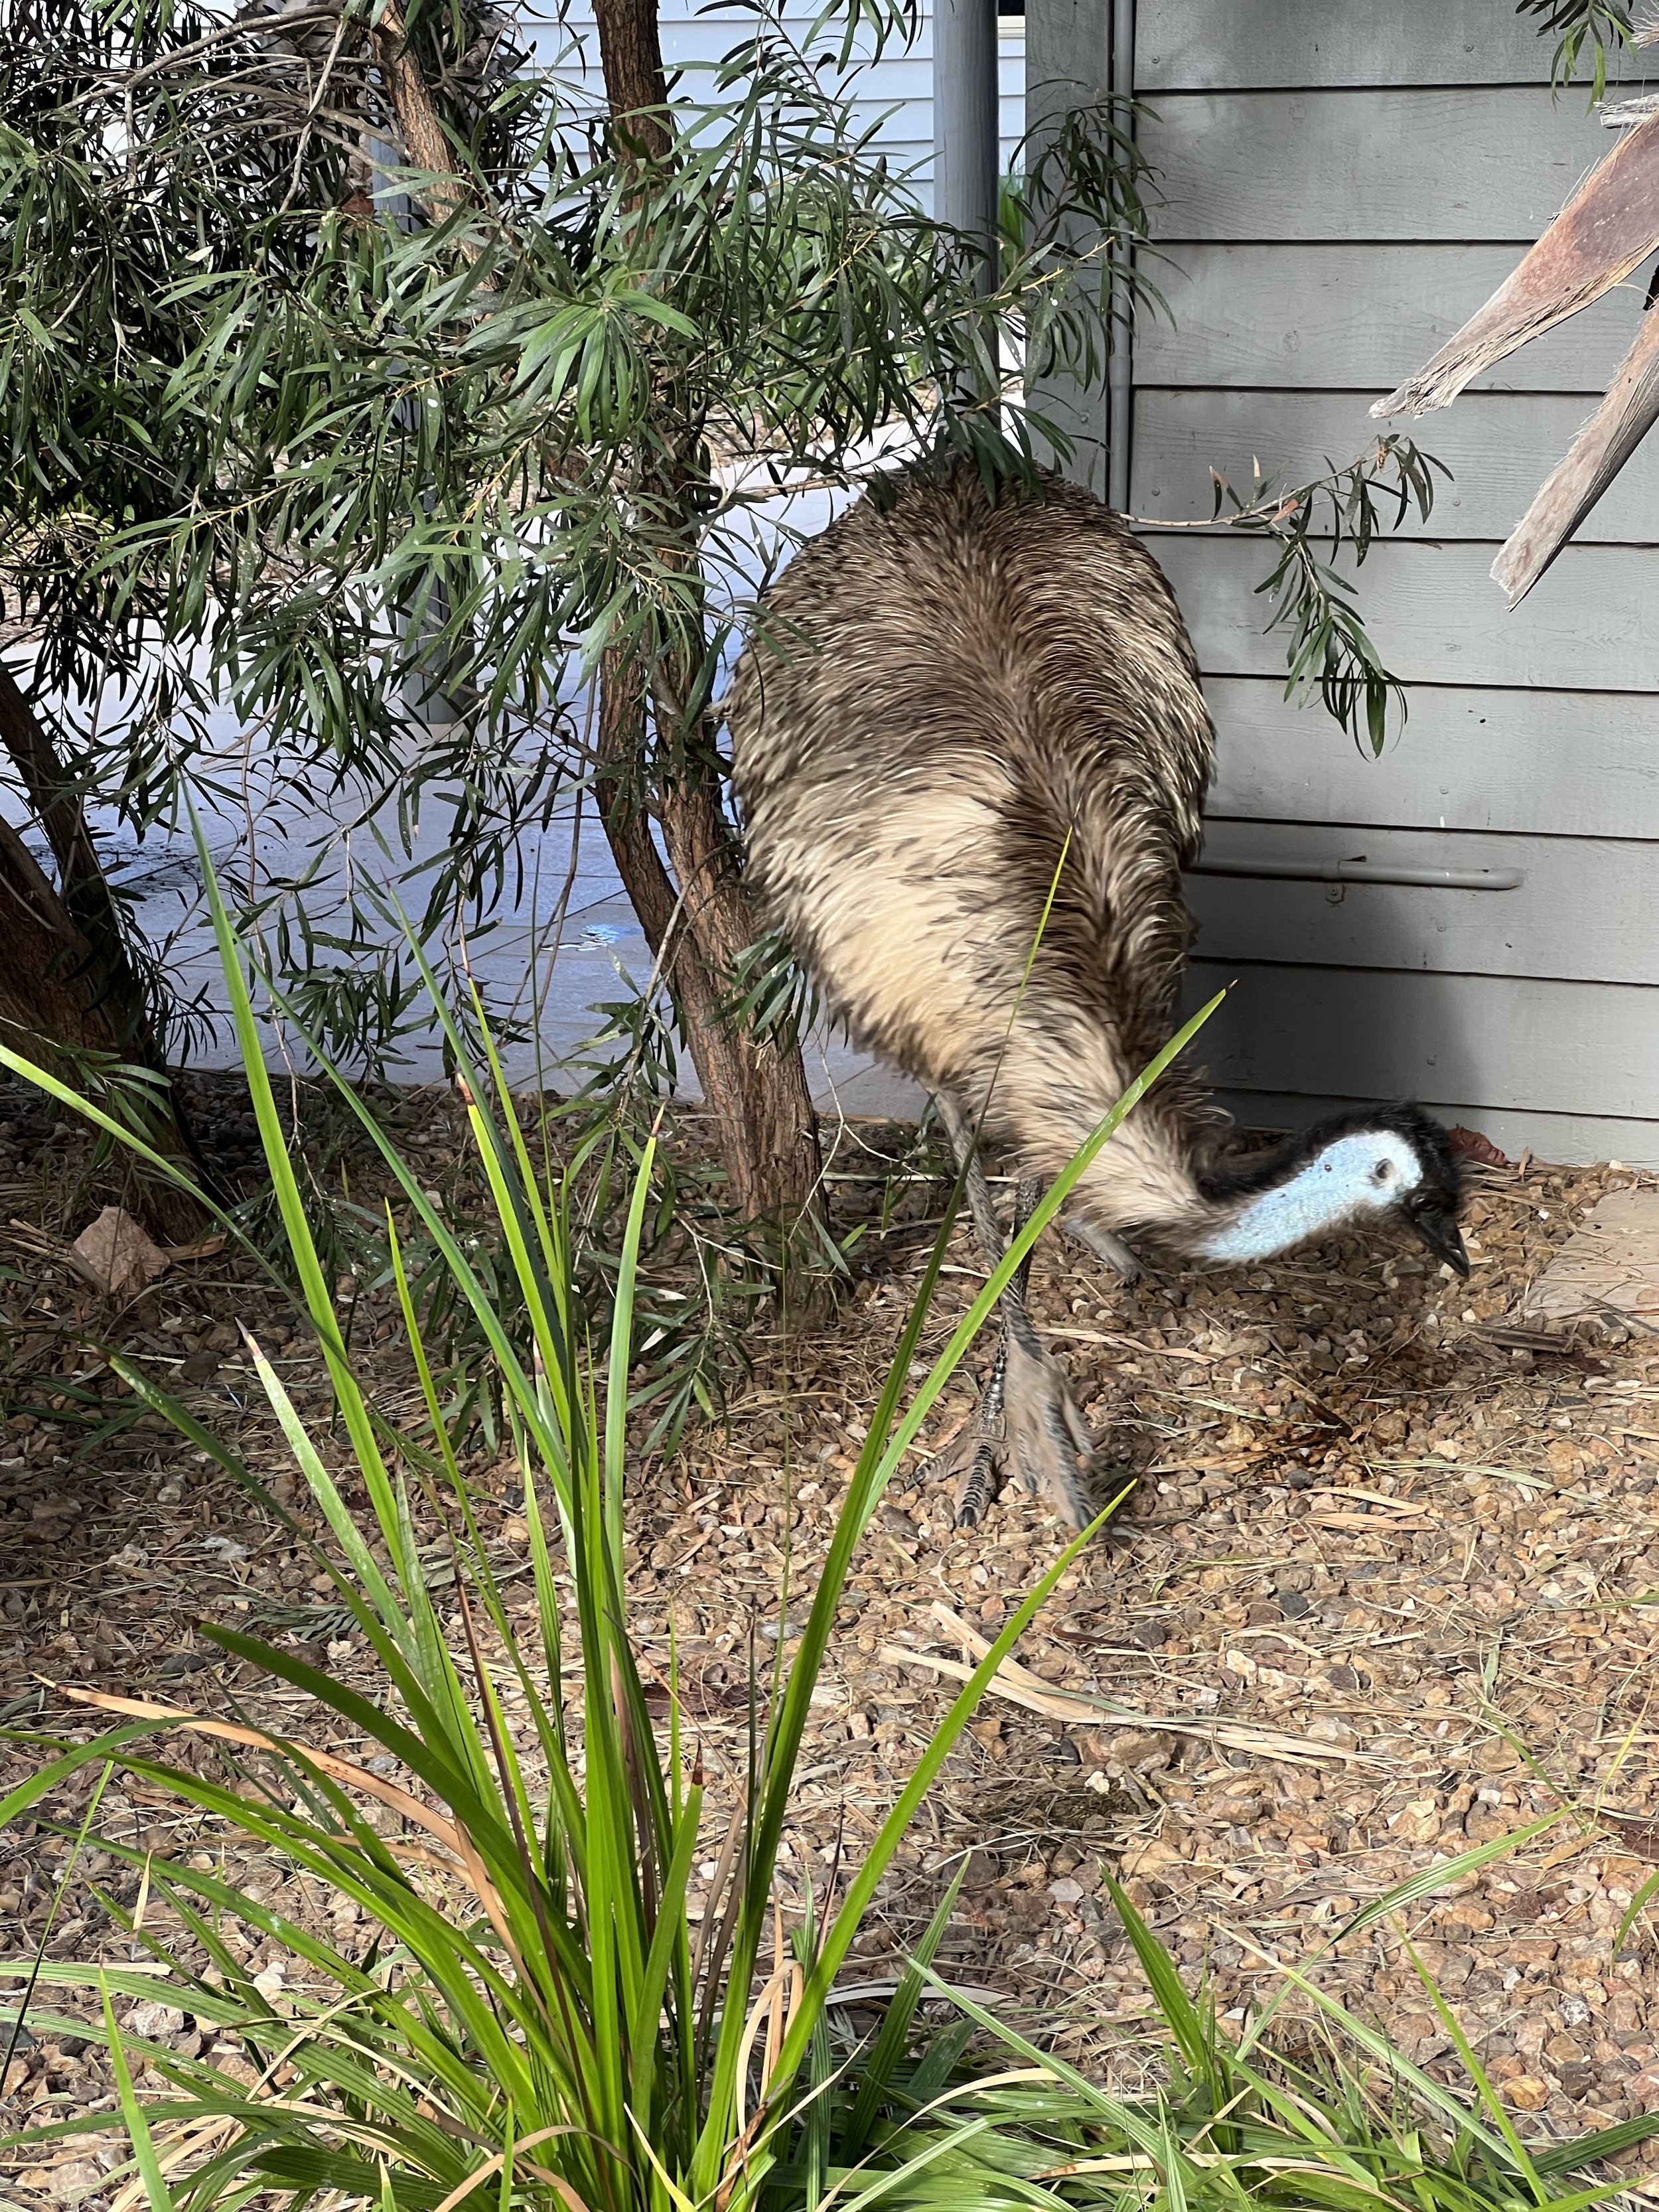 Finally some emus!